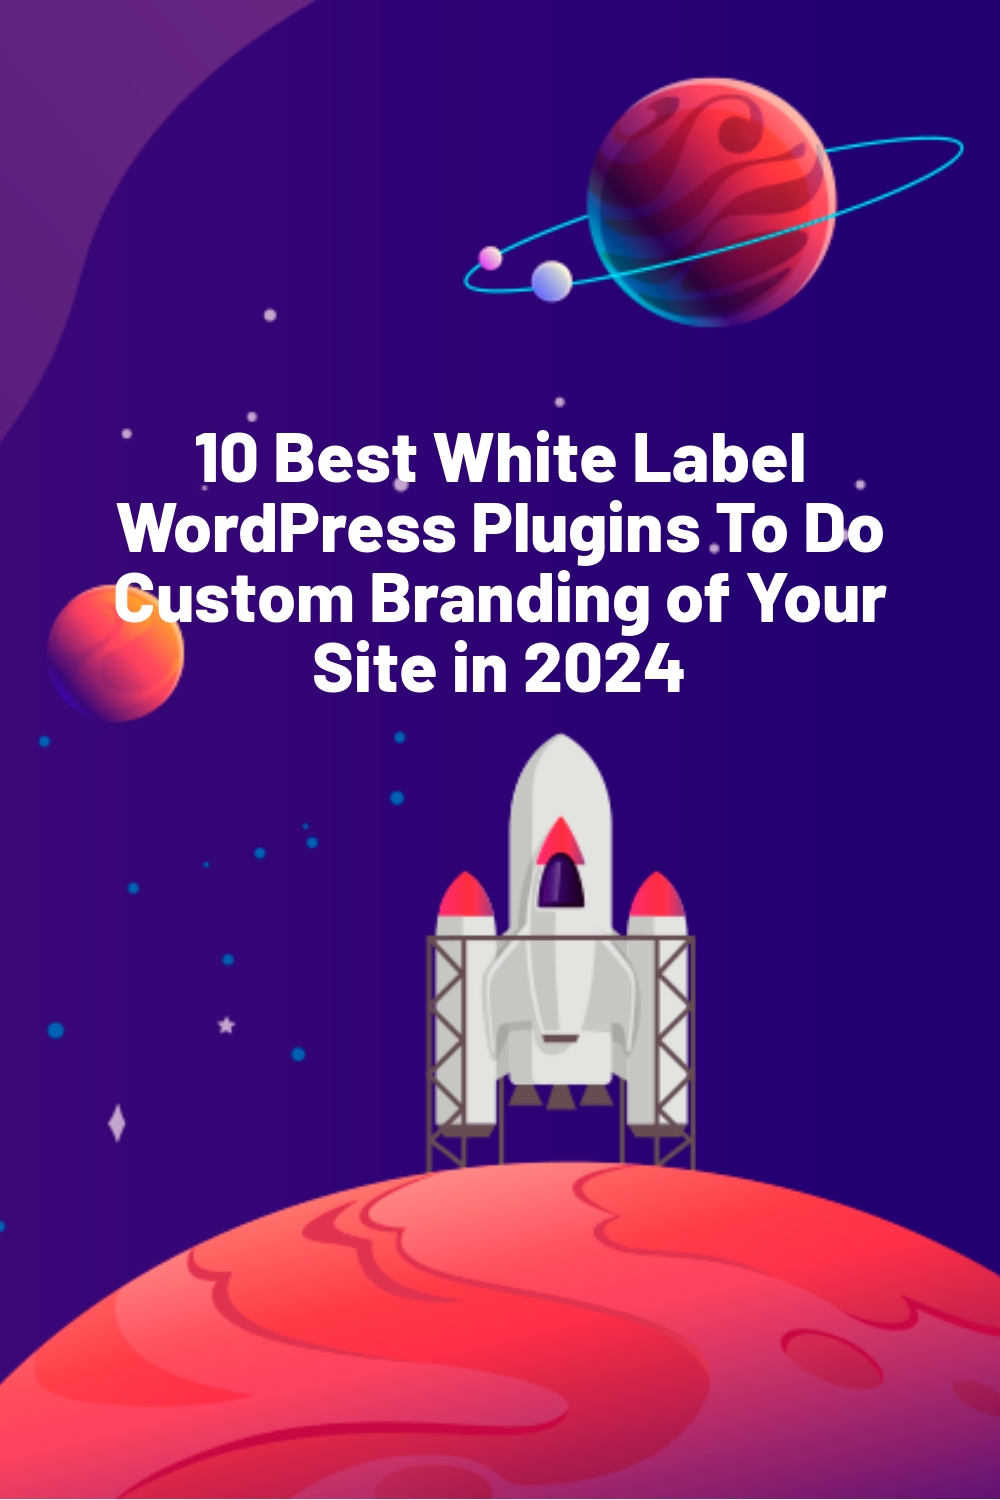 10 Best White Label WordPress Plugins To Do Custom Branding of Your Site in 2024